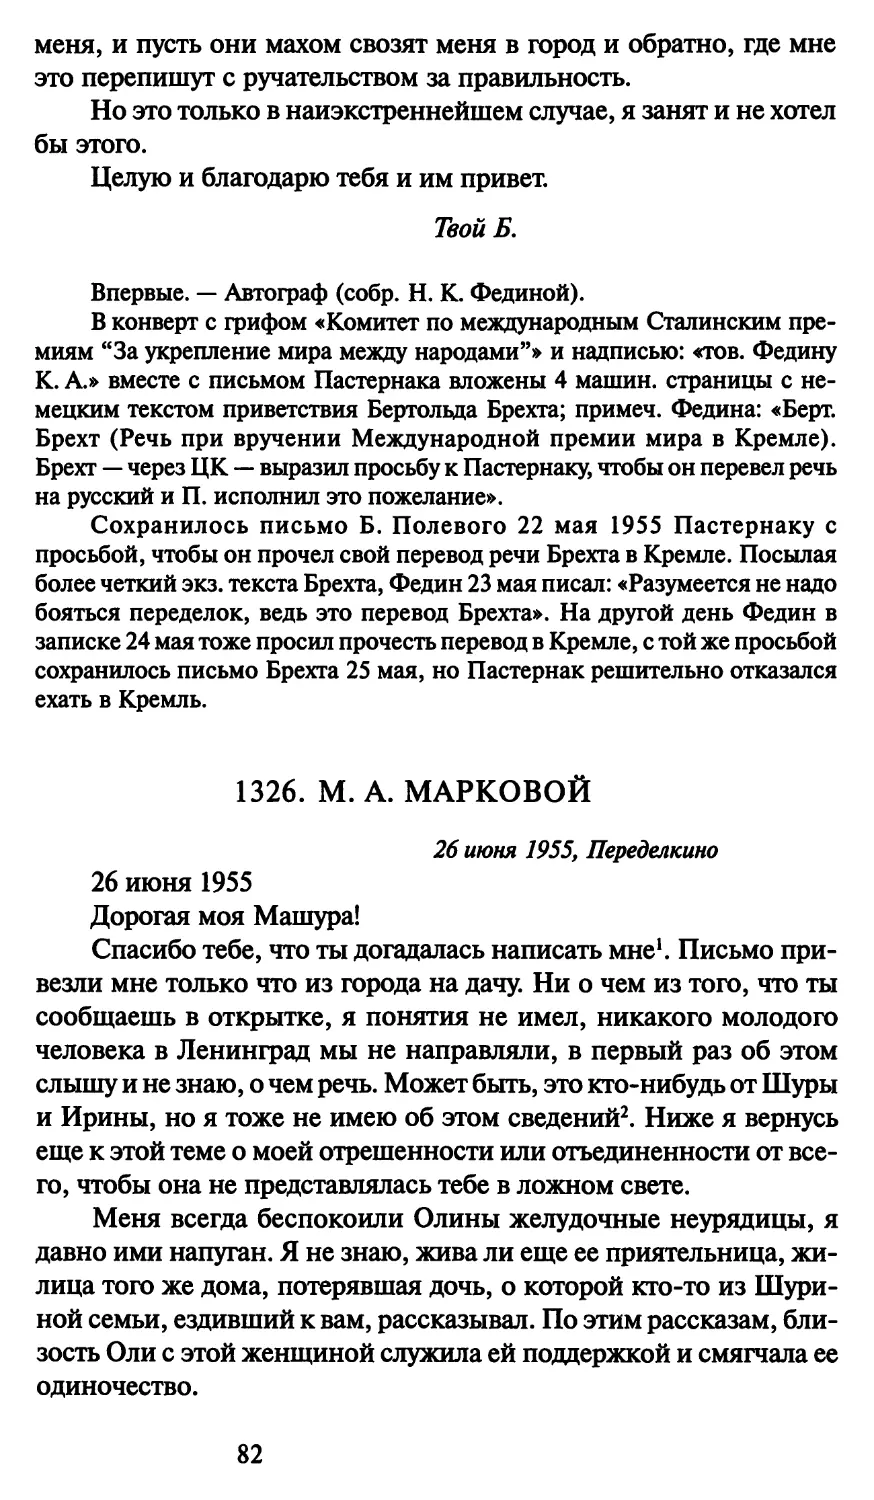 1326. М. А. Марковой 26 июня 1955